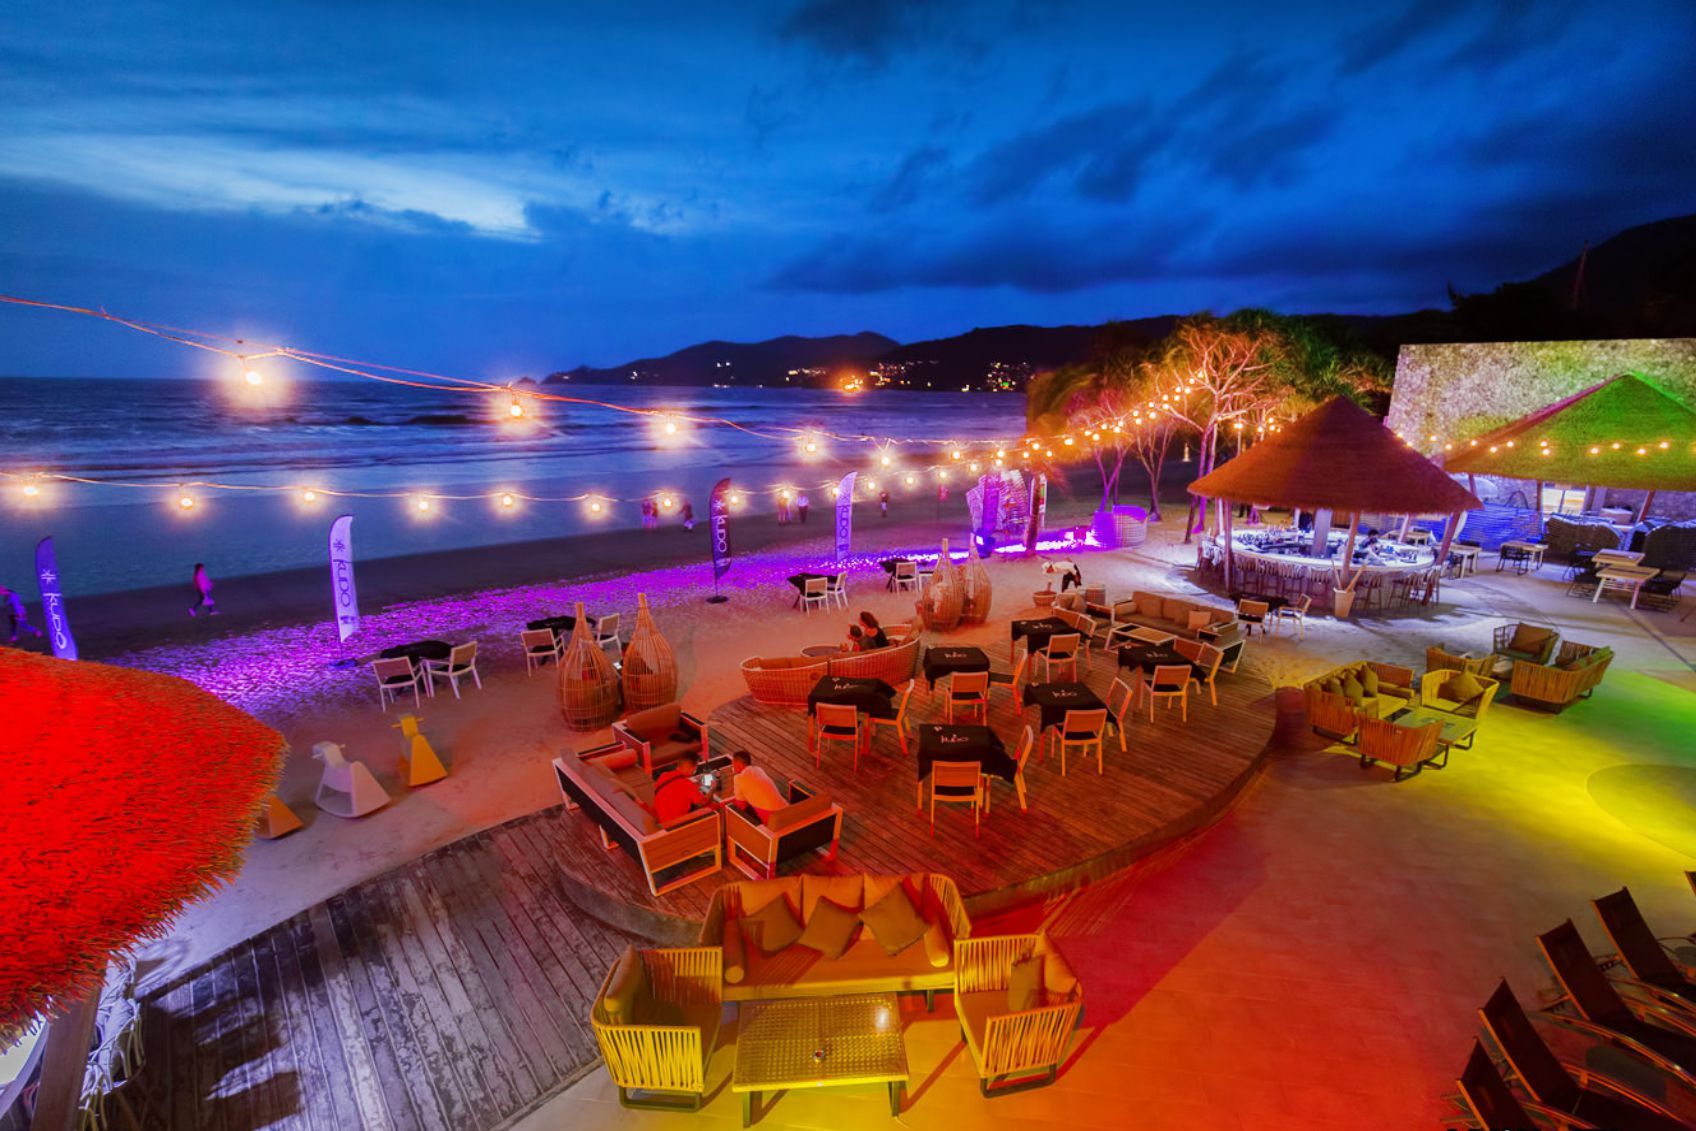 Thailand Kudo beach club Phuket,Thailand – HiSoLiving